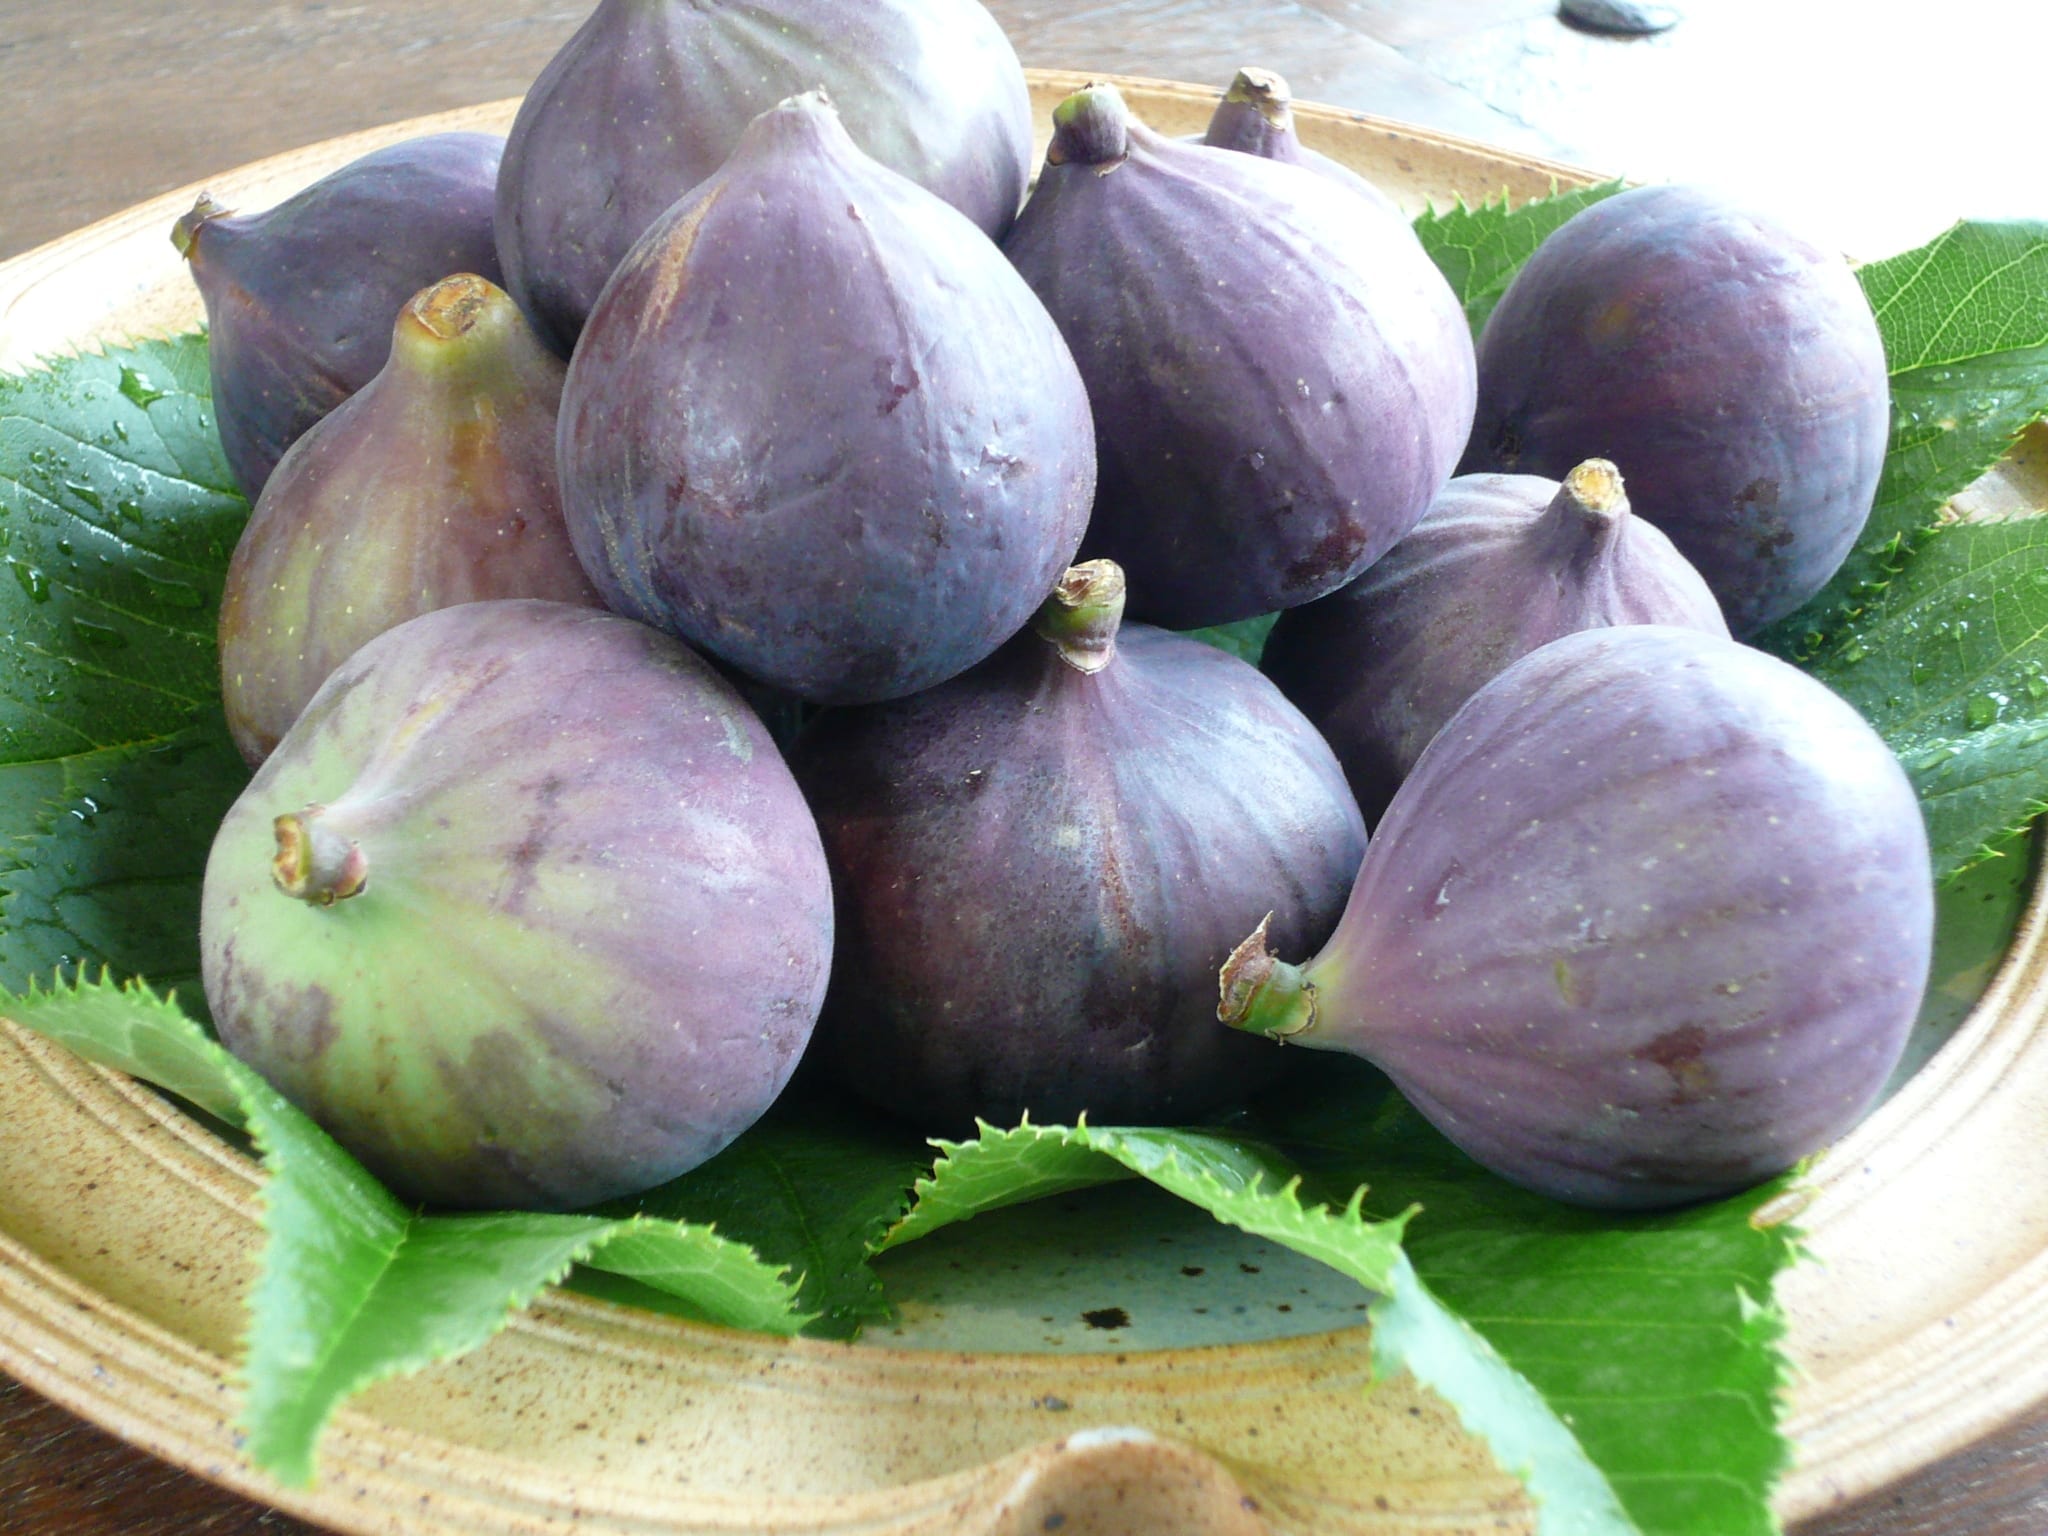 A plate of a dozen fresh, purple figs